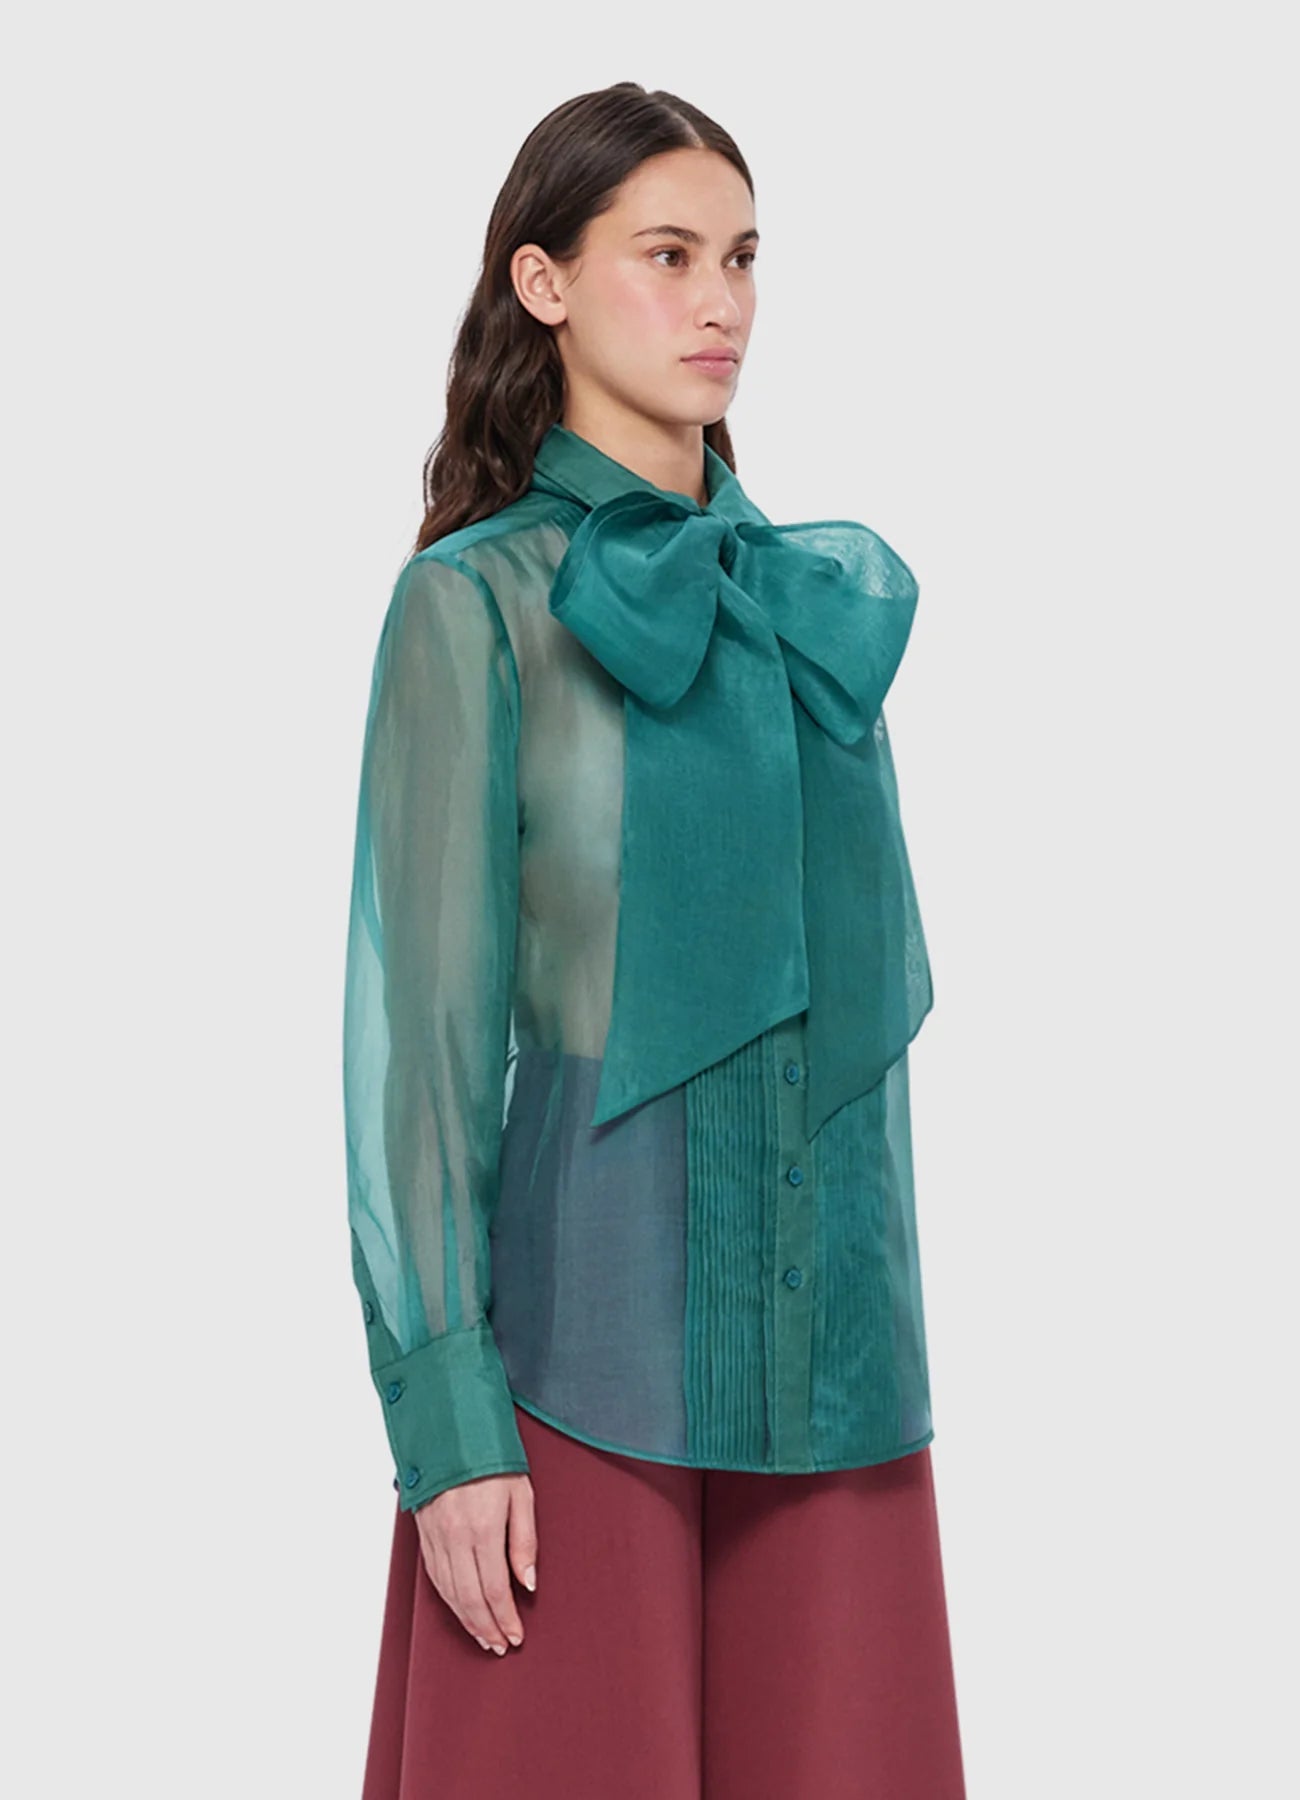 LEO LIN Dressage Silk Organza Tie Blouse - Teal - Leo Lin - Pinkhill - darwin fashion - darwin boutique